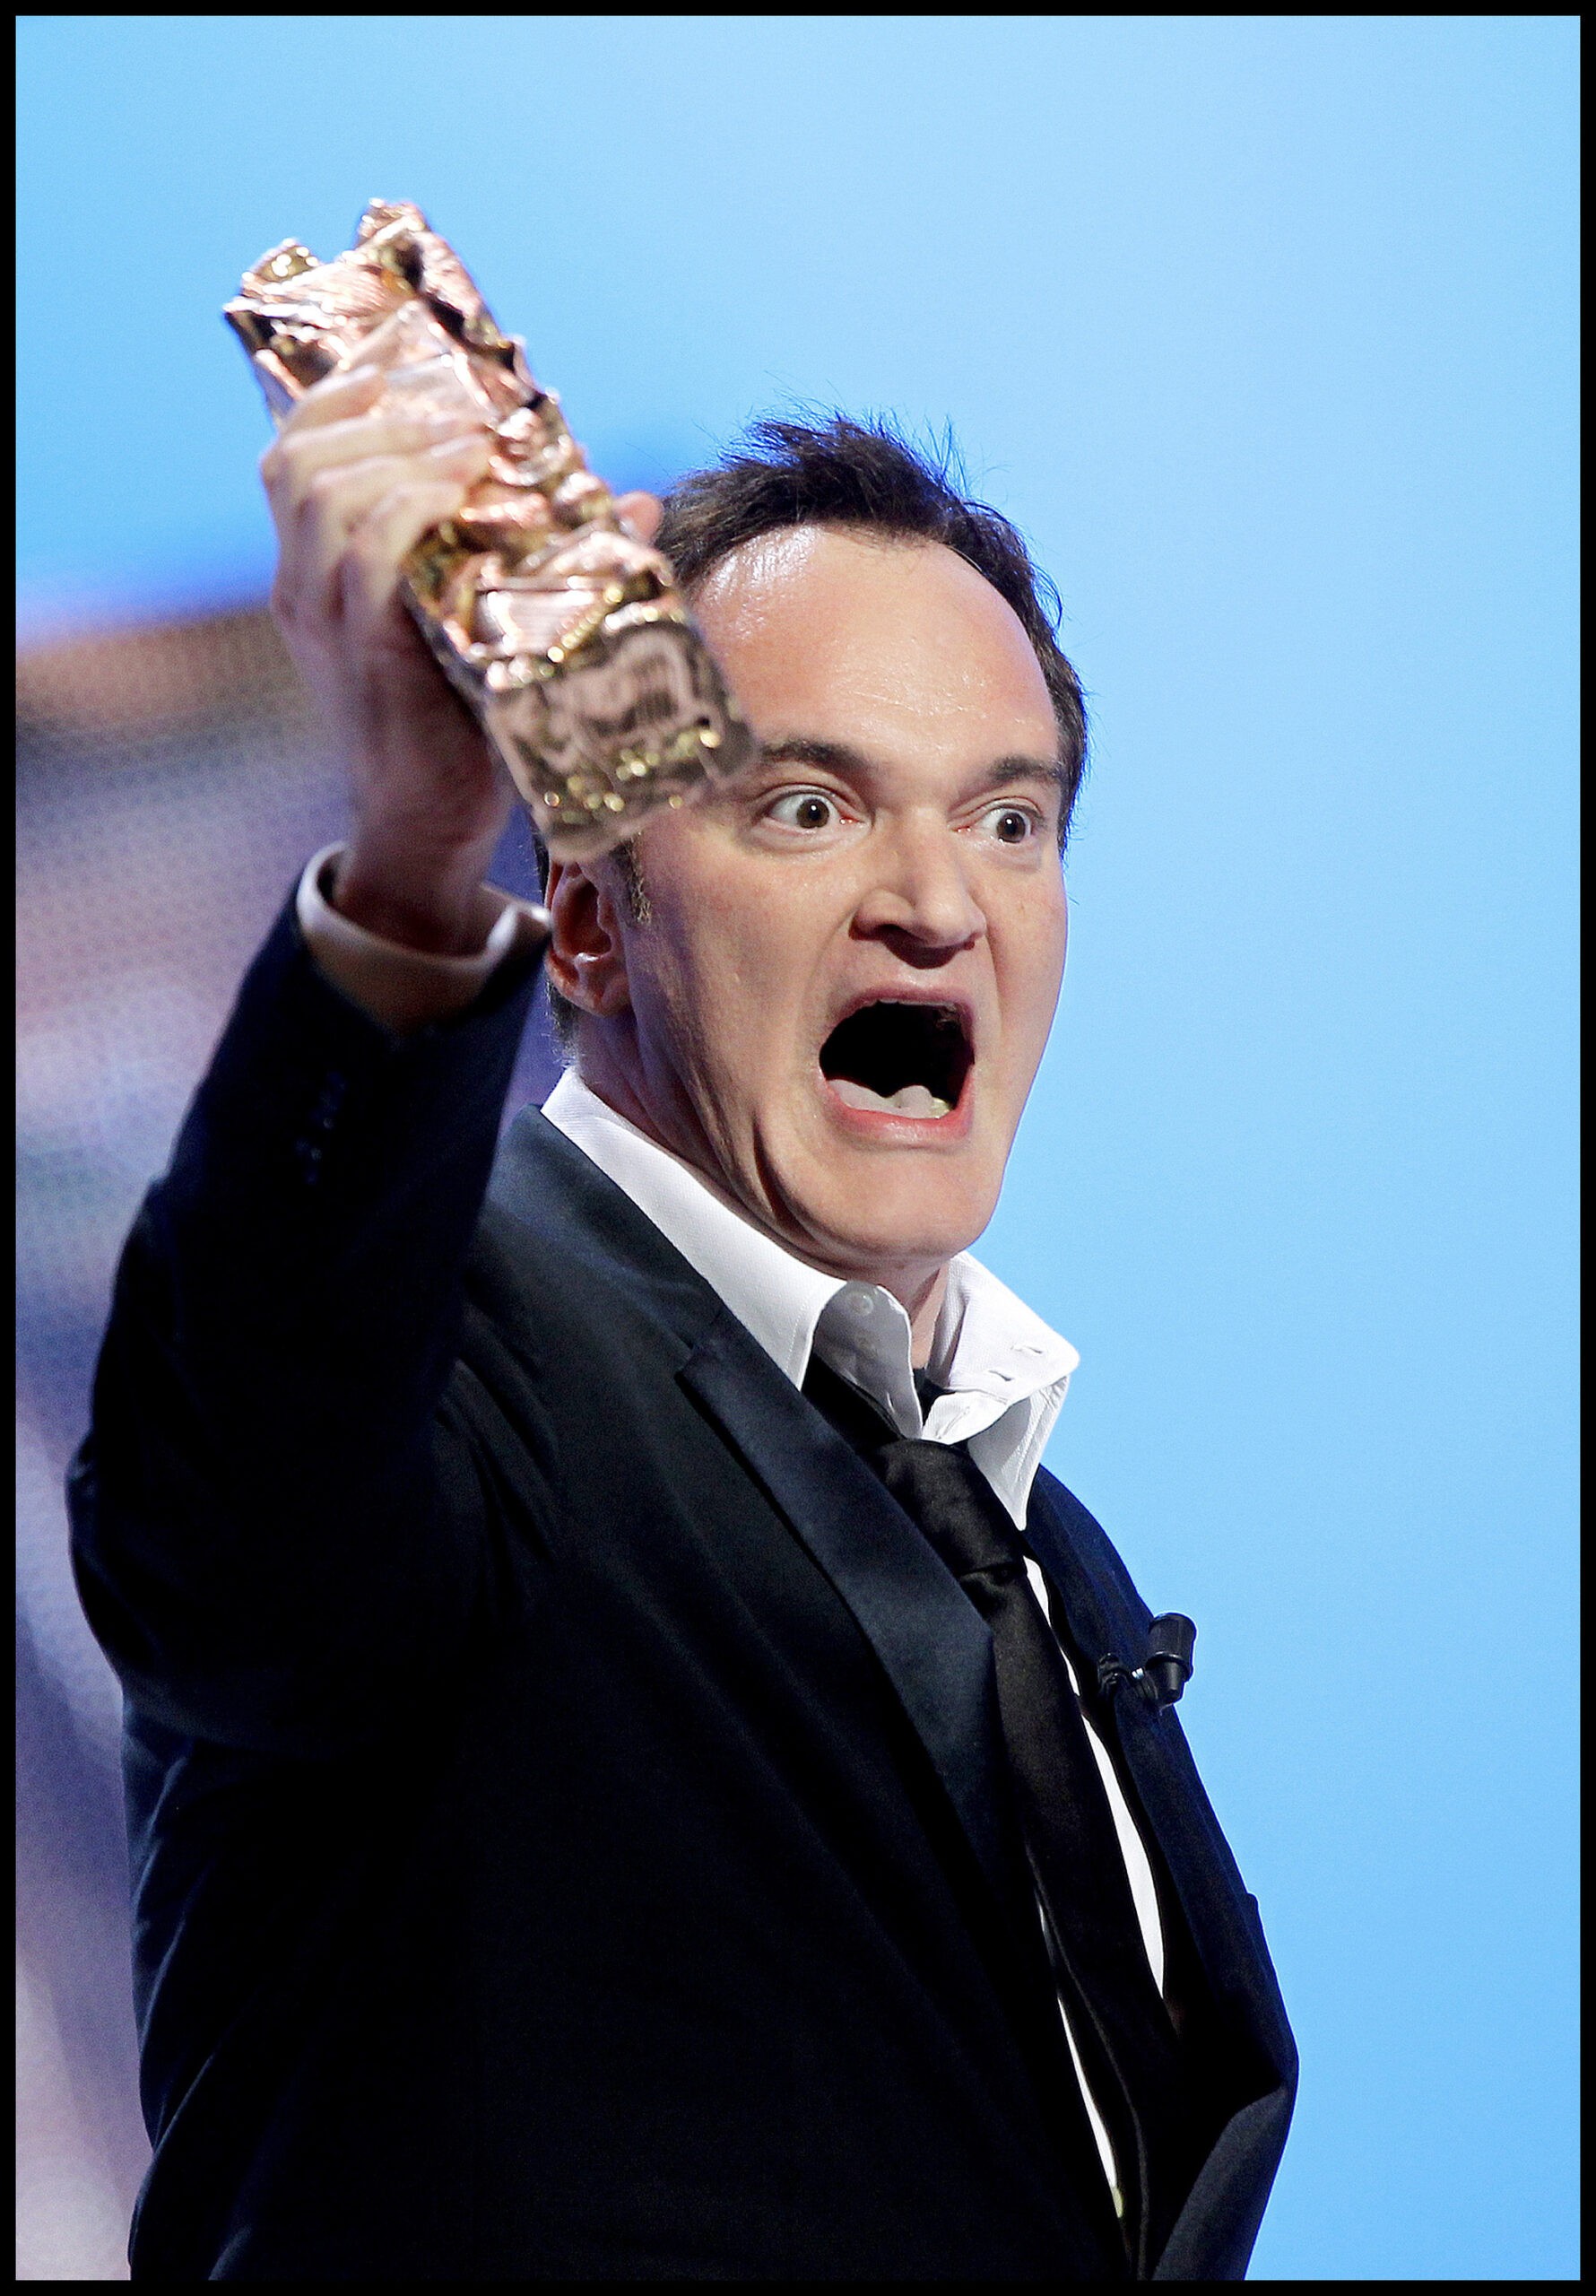 Quentin Tarantino, Biography, Movies, & Facts